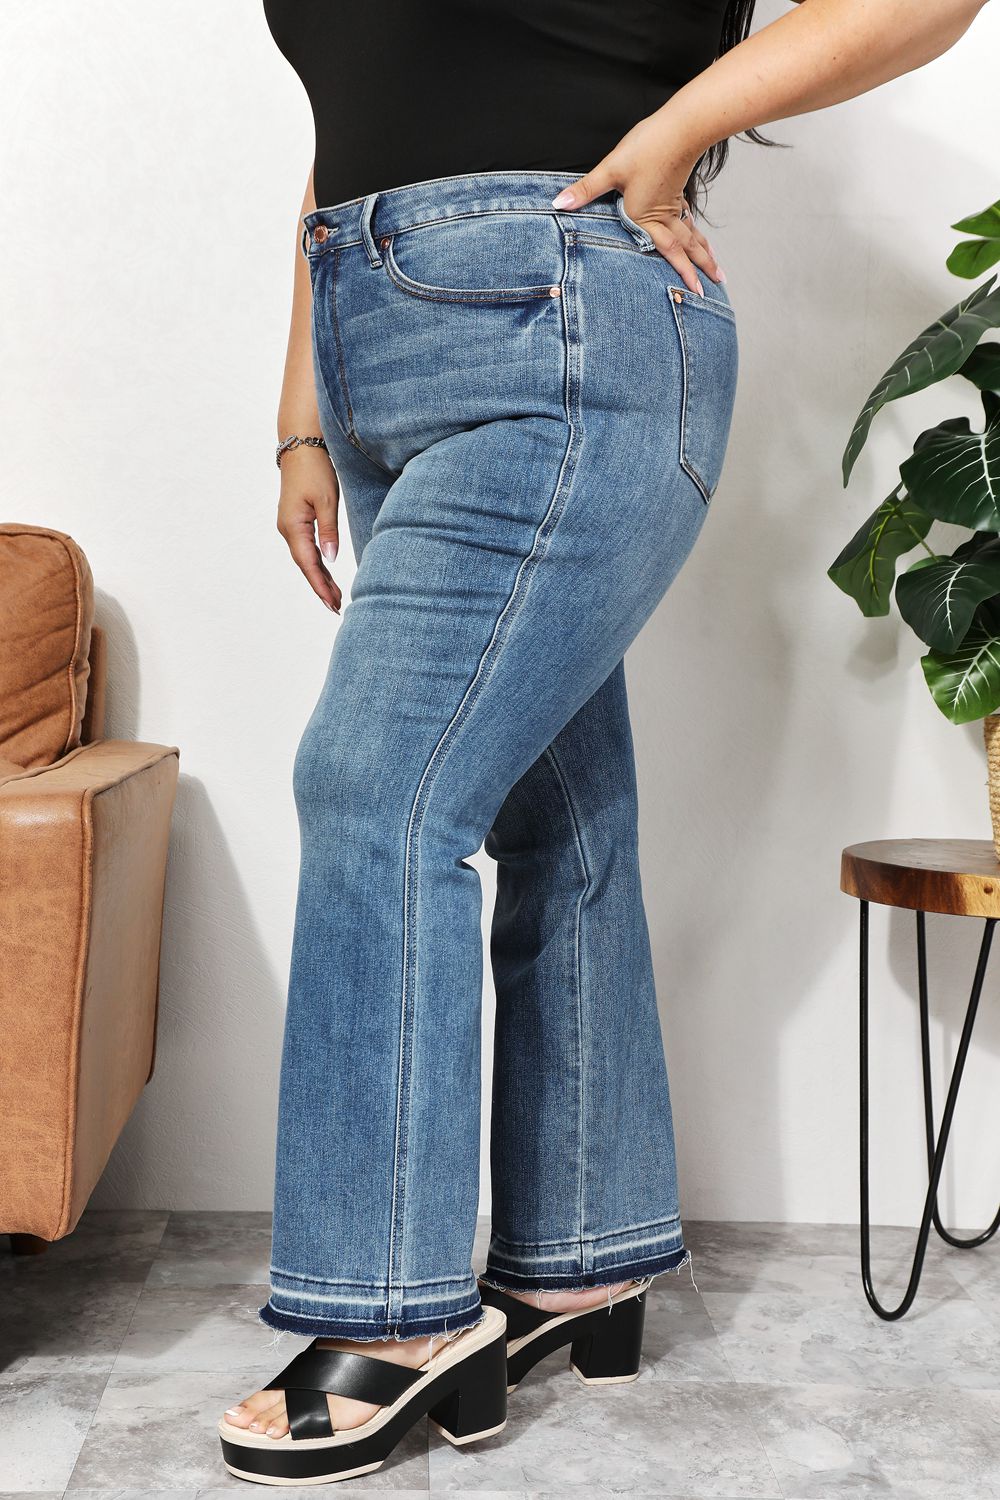 Judy Blue High Waist Jeans with Pockets